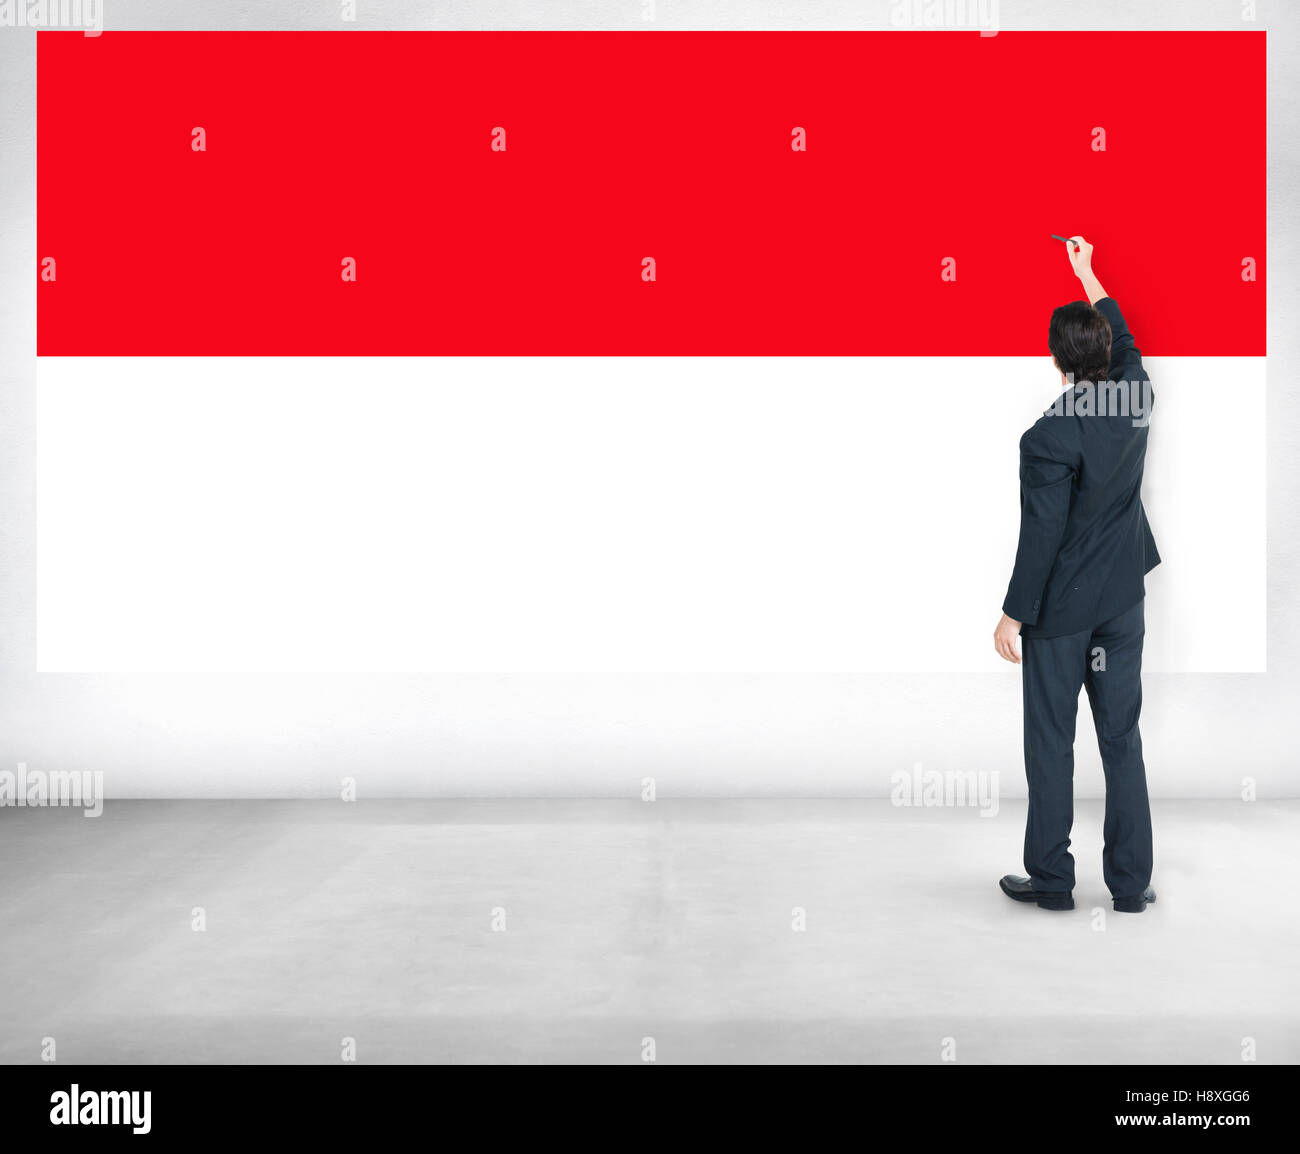 Indonesien-Flagge Land Nationalität Liberty Konzept Stockfoto